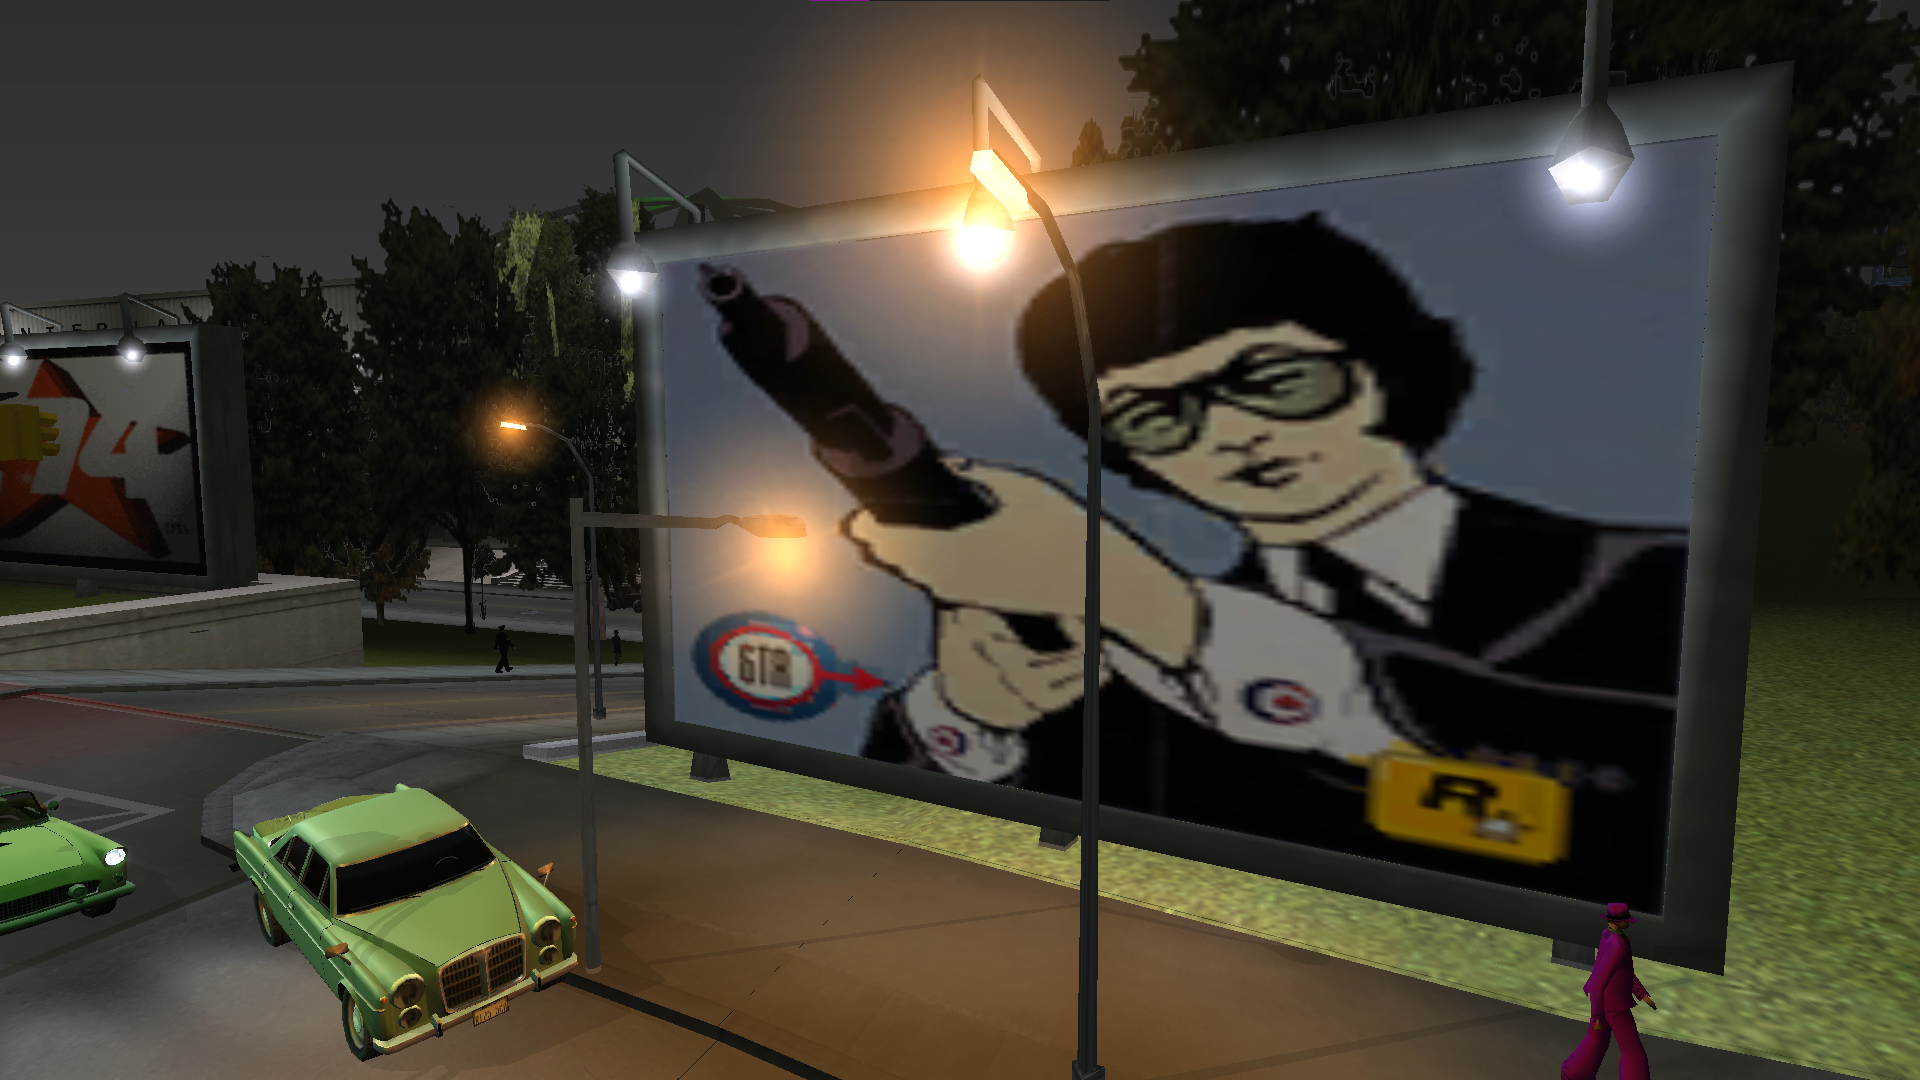 Grand Theft Auto: Liberty Wiseguys mod - ModDB